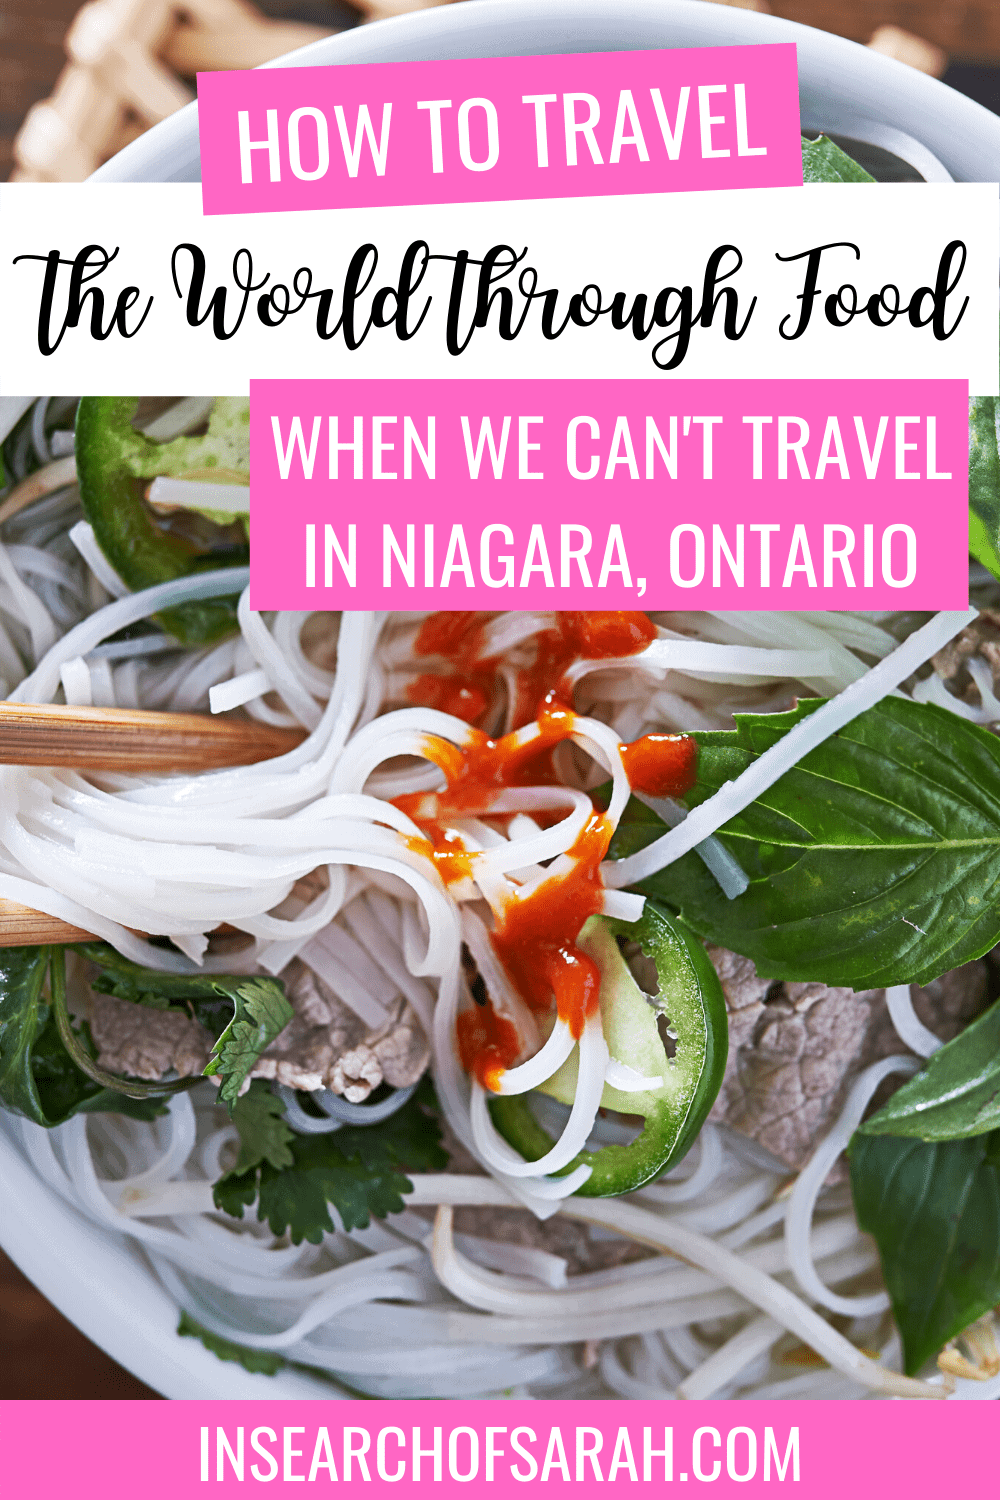 Travel through food niagara